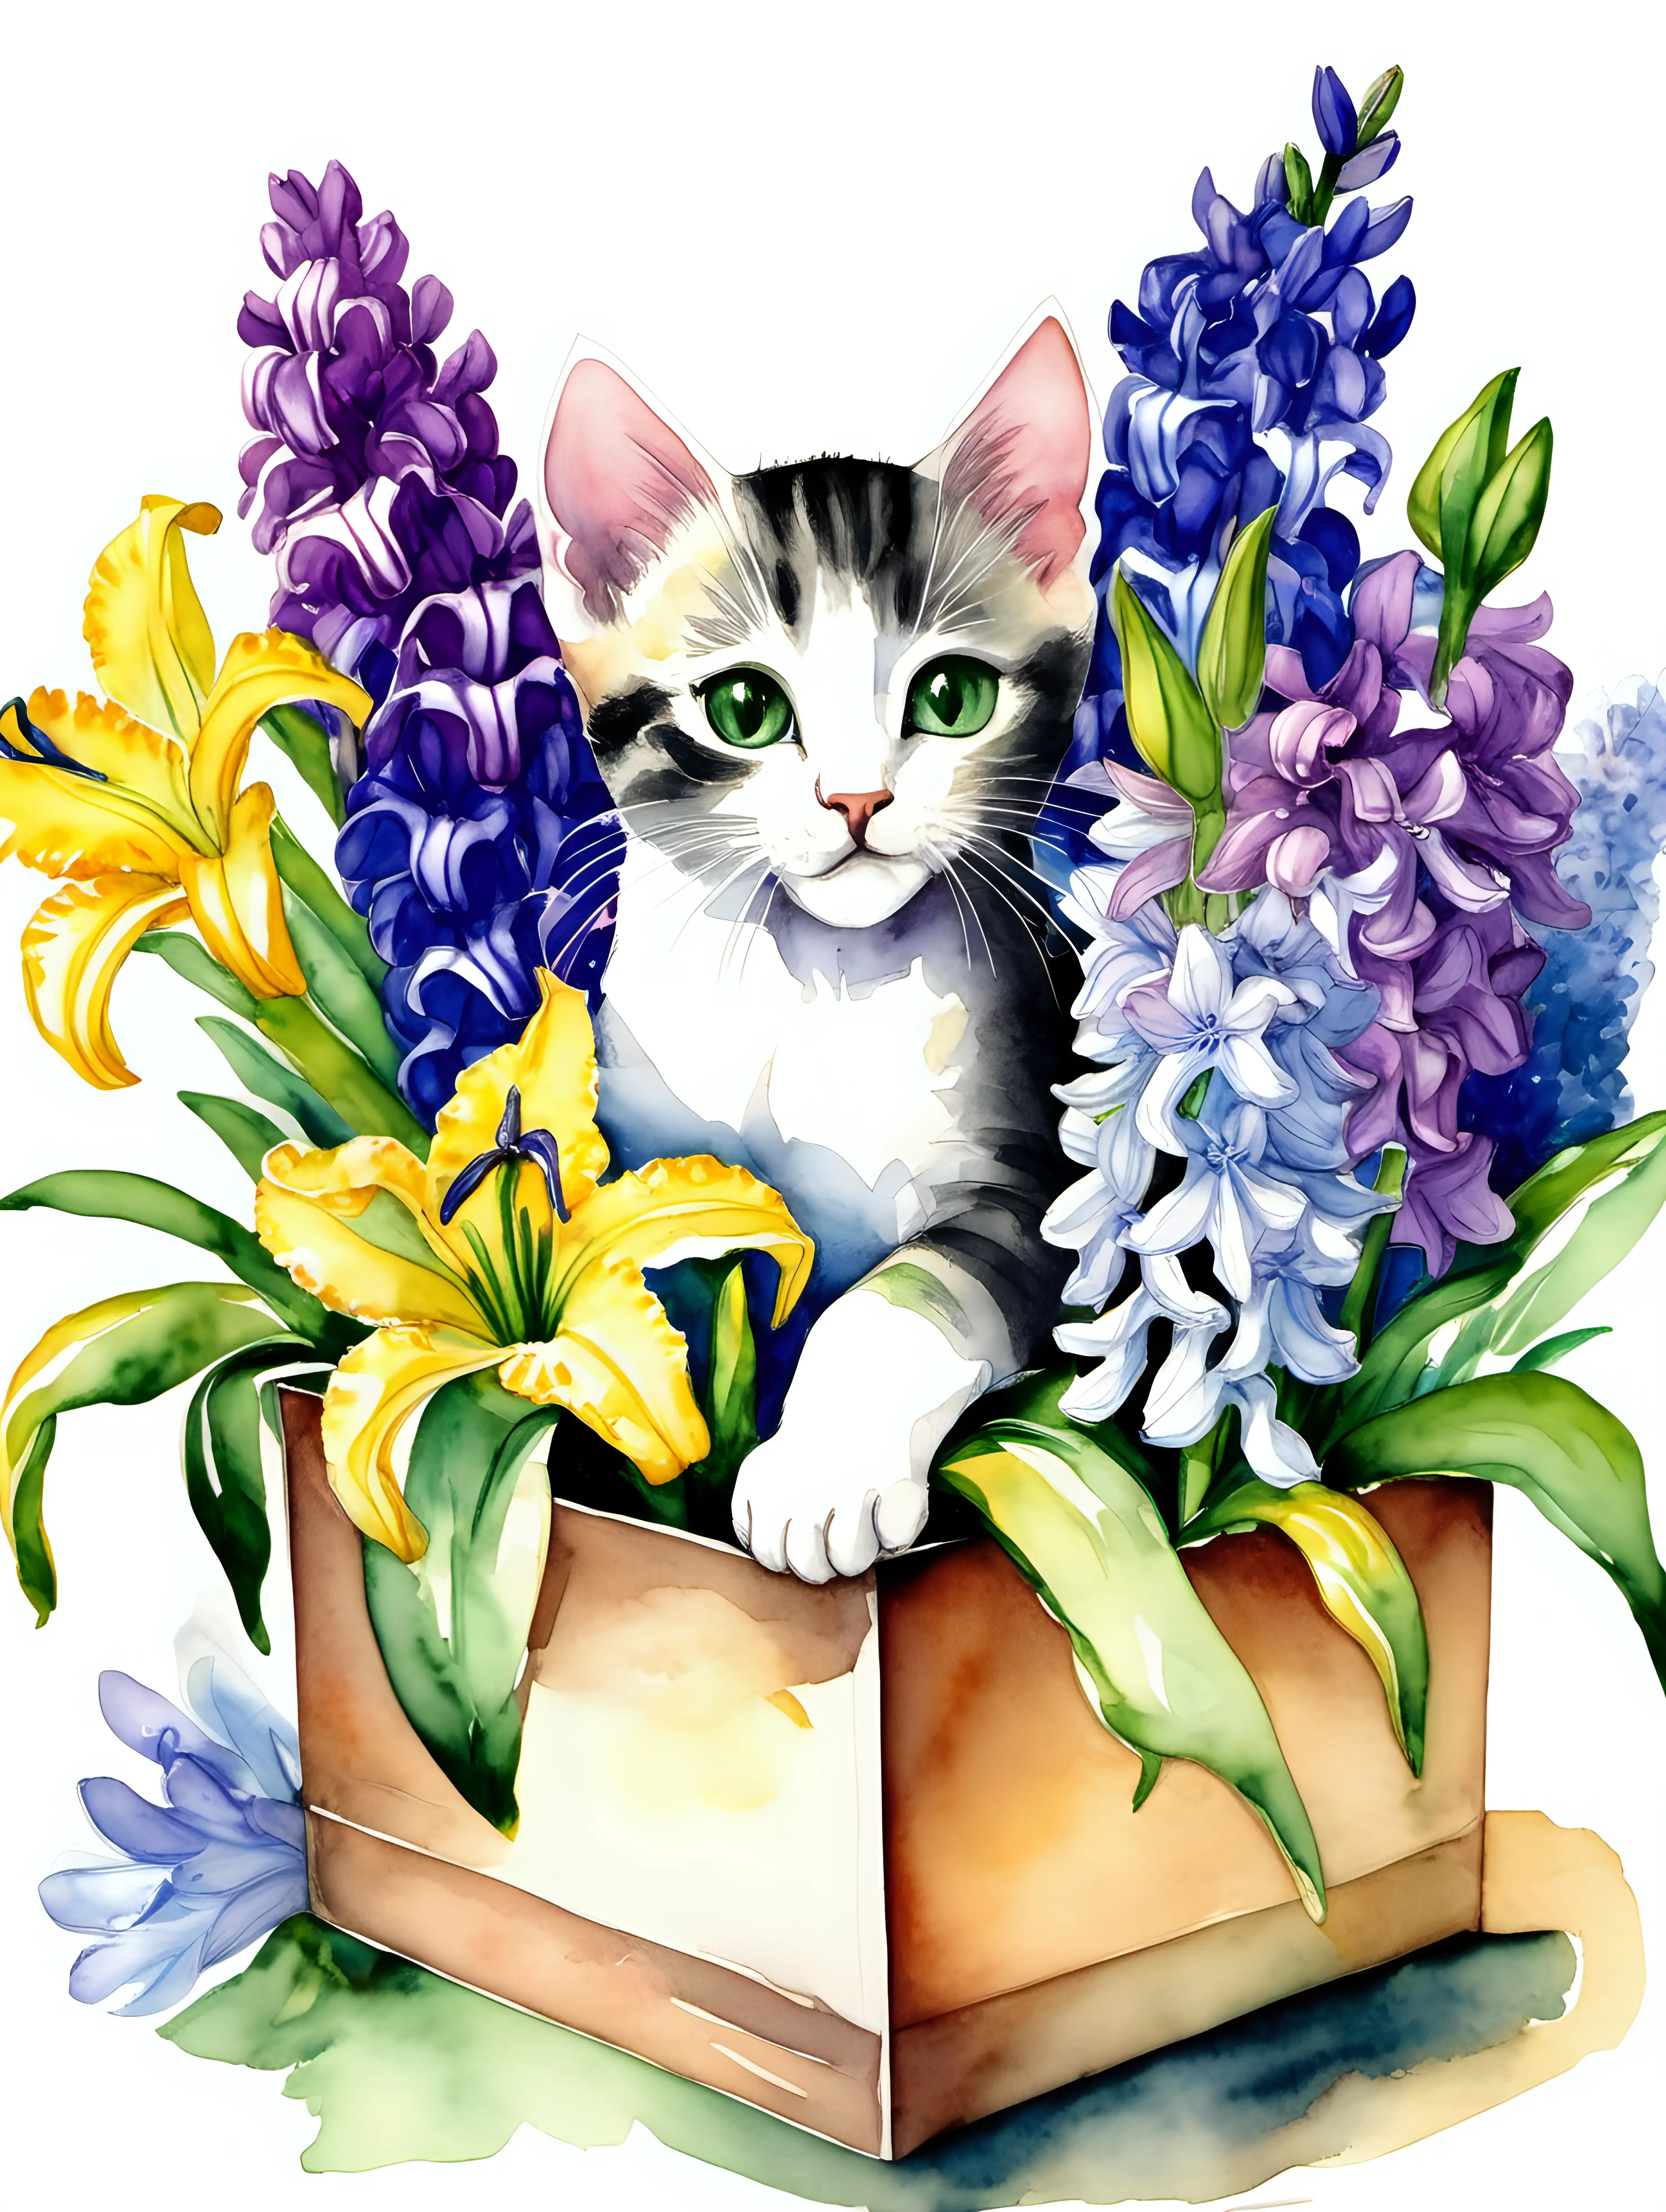 Springtime Celebration Playful Kitten Surrounded by Floral Splendor